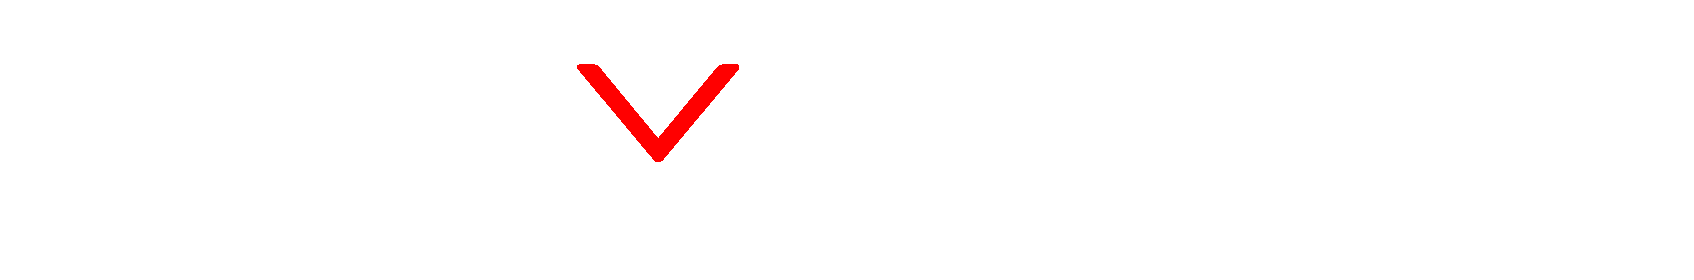 HD MIRROR